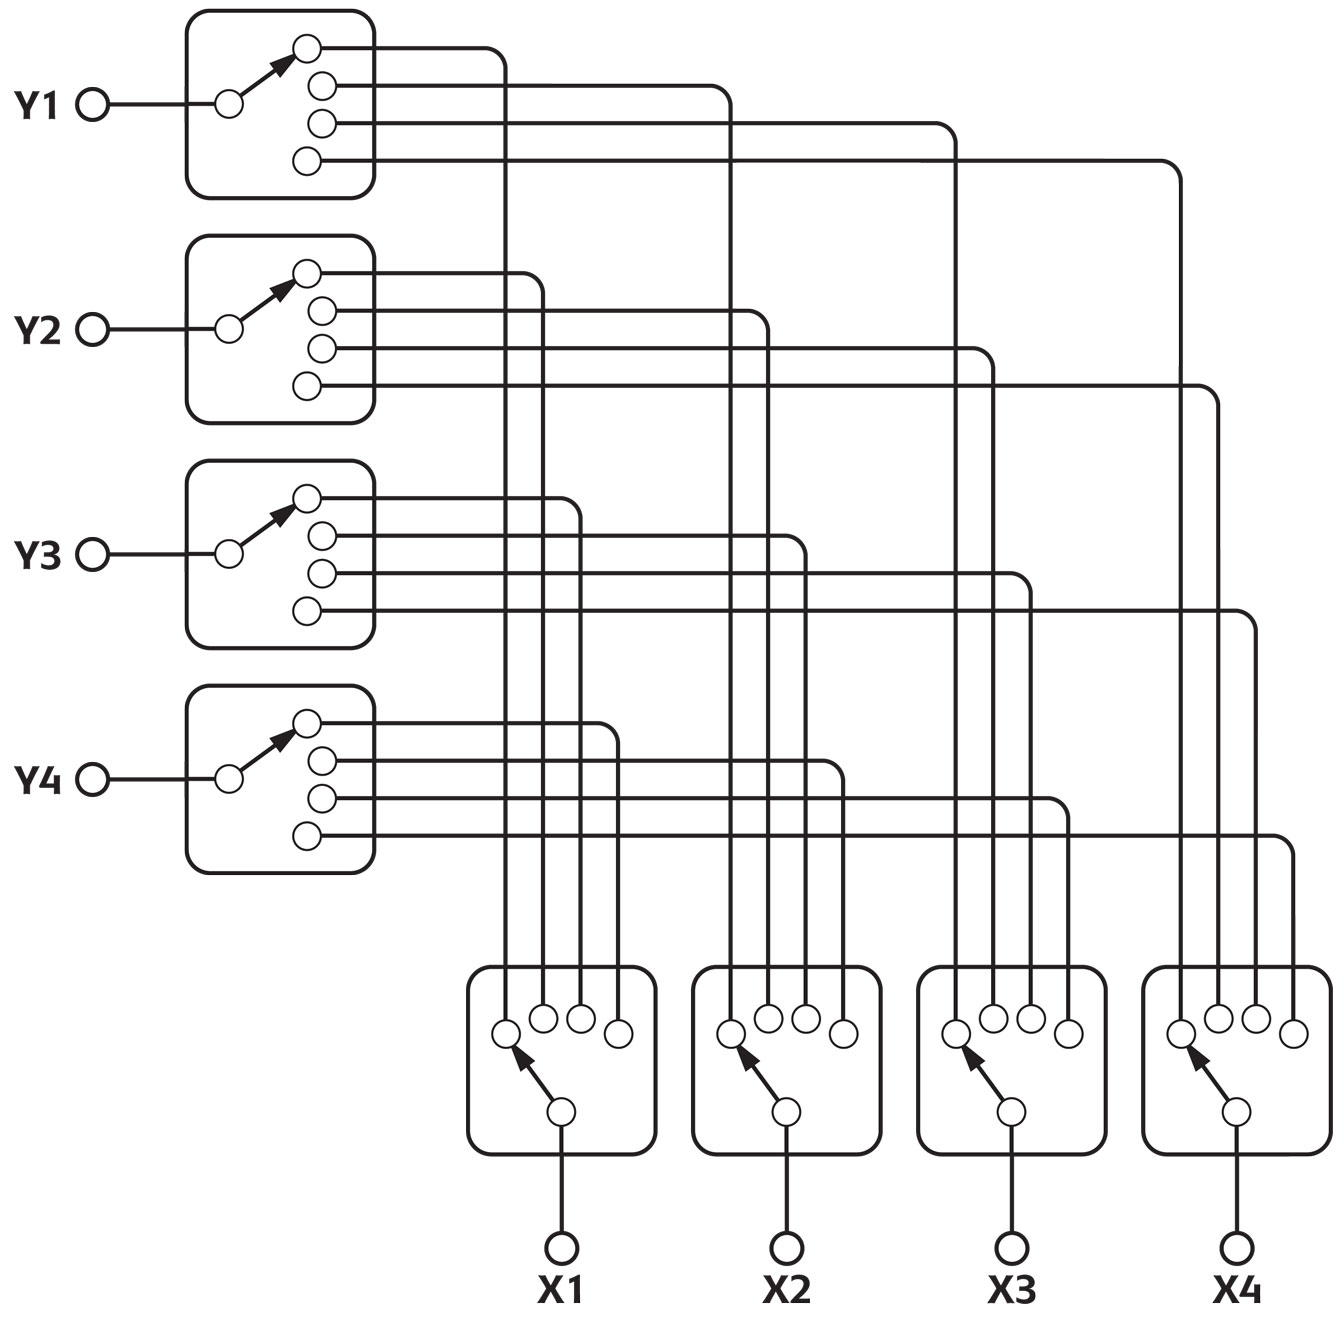 Tree MUX Matrix Switch (Blocking Matrix)